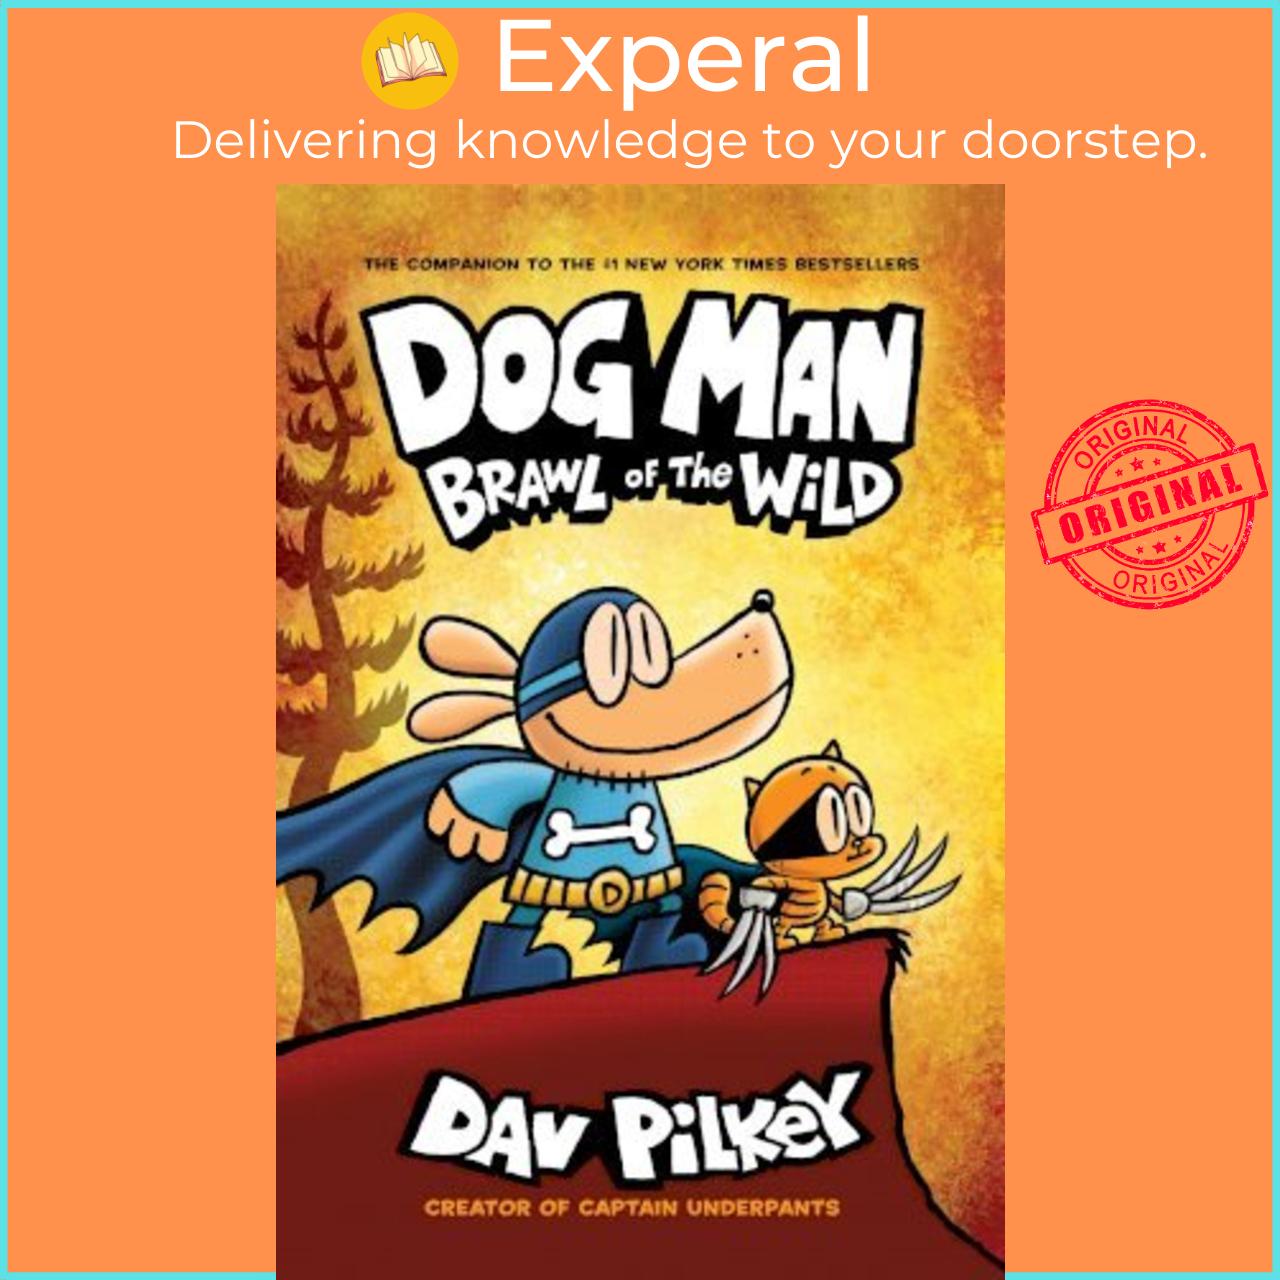 Sách - Dog Man 6: Brawl of the Wild PB by Dav Pilkey (UK edition, paperback)